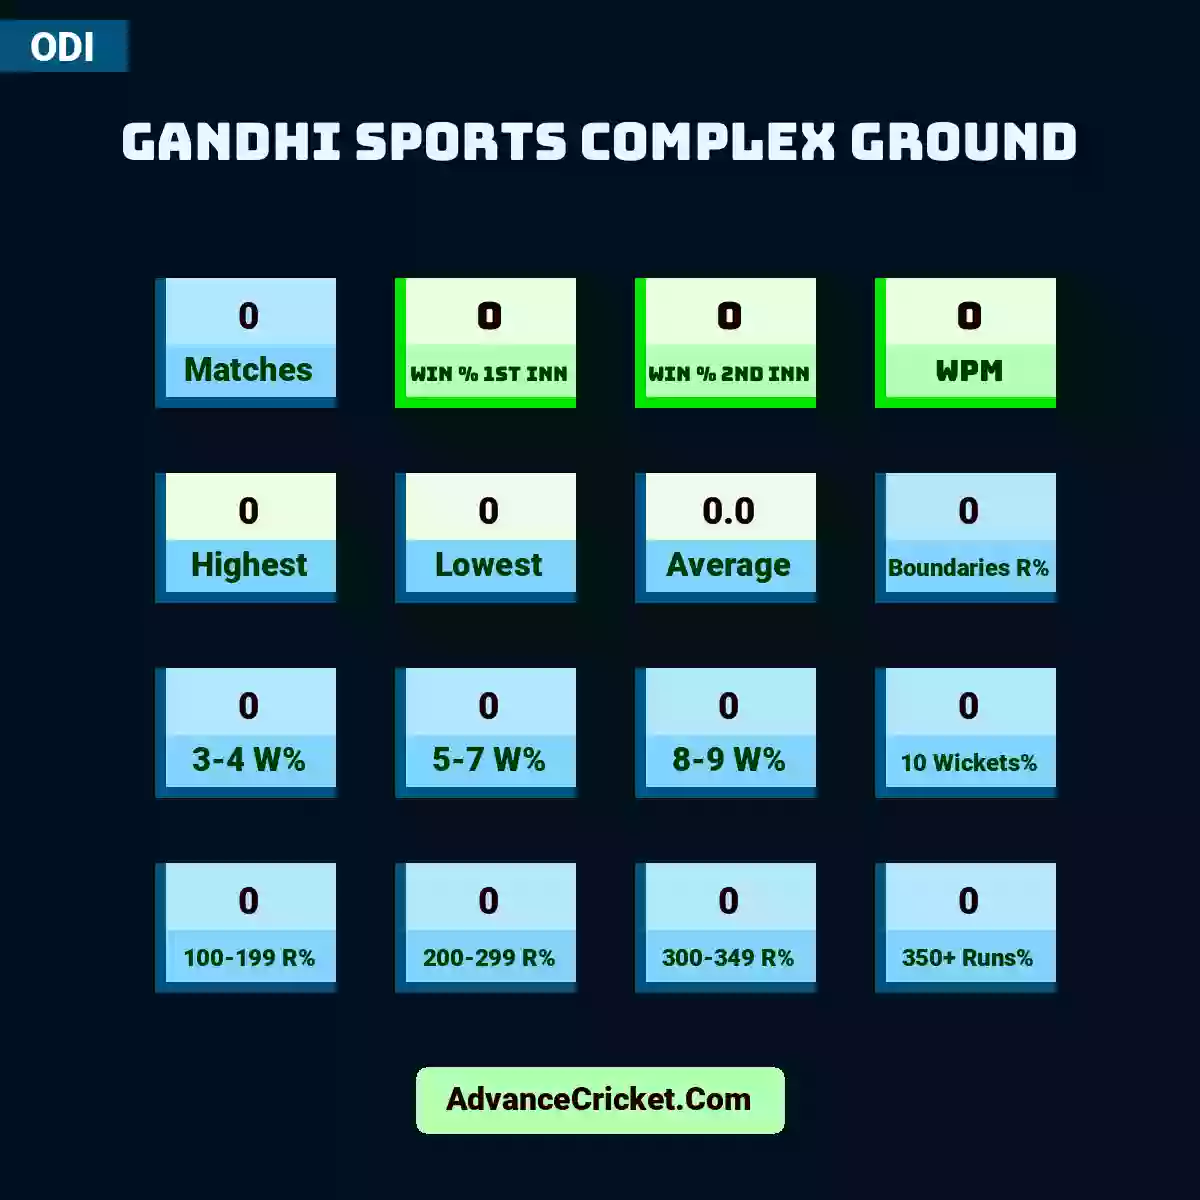 Image showing Gandhi Sports Complex Ground with Matches: 0, Win % 1st Inn: 0, Win % 2nd Inn: 0, WPM: 0, Highest: 0, Lowest: 0, Average: 0.0, Boundaries R%: 0, 3-4 W%: 0, 5-7 W%: 0, 8-9 W%: 0, 10 Wickets%: 0, 100-199 R%: 0, 200-299 R%: 0, 300-349 R%: 0, 350+ Runs%: 0.